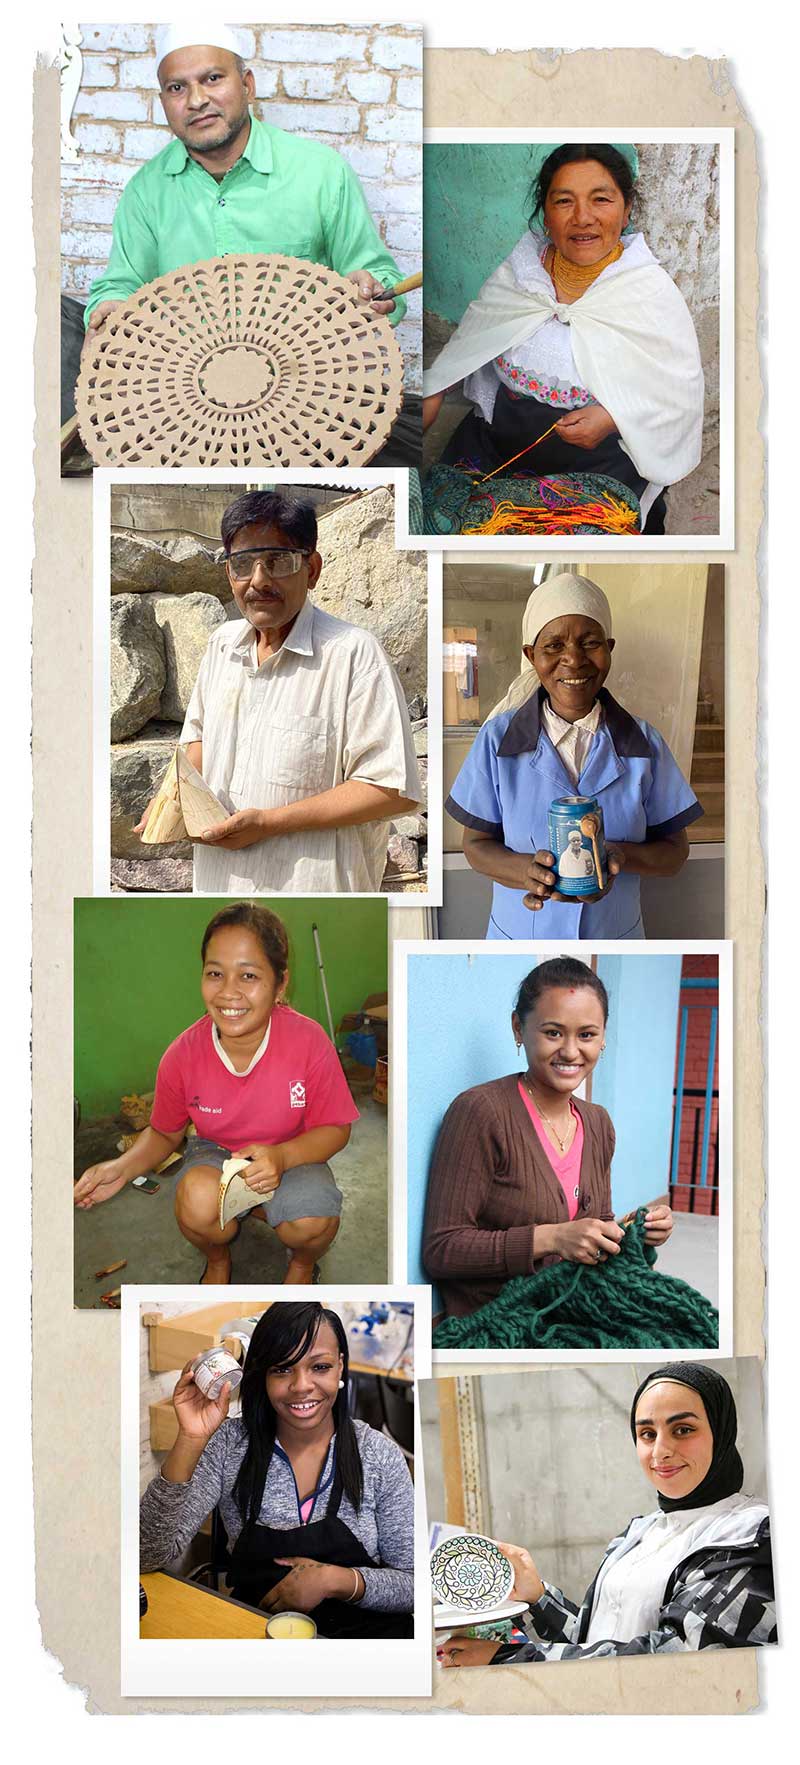 artisans from around the world